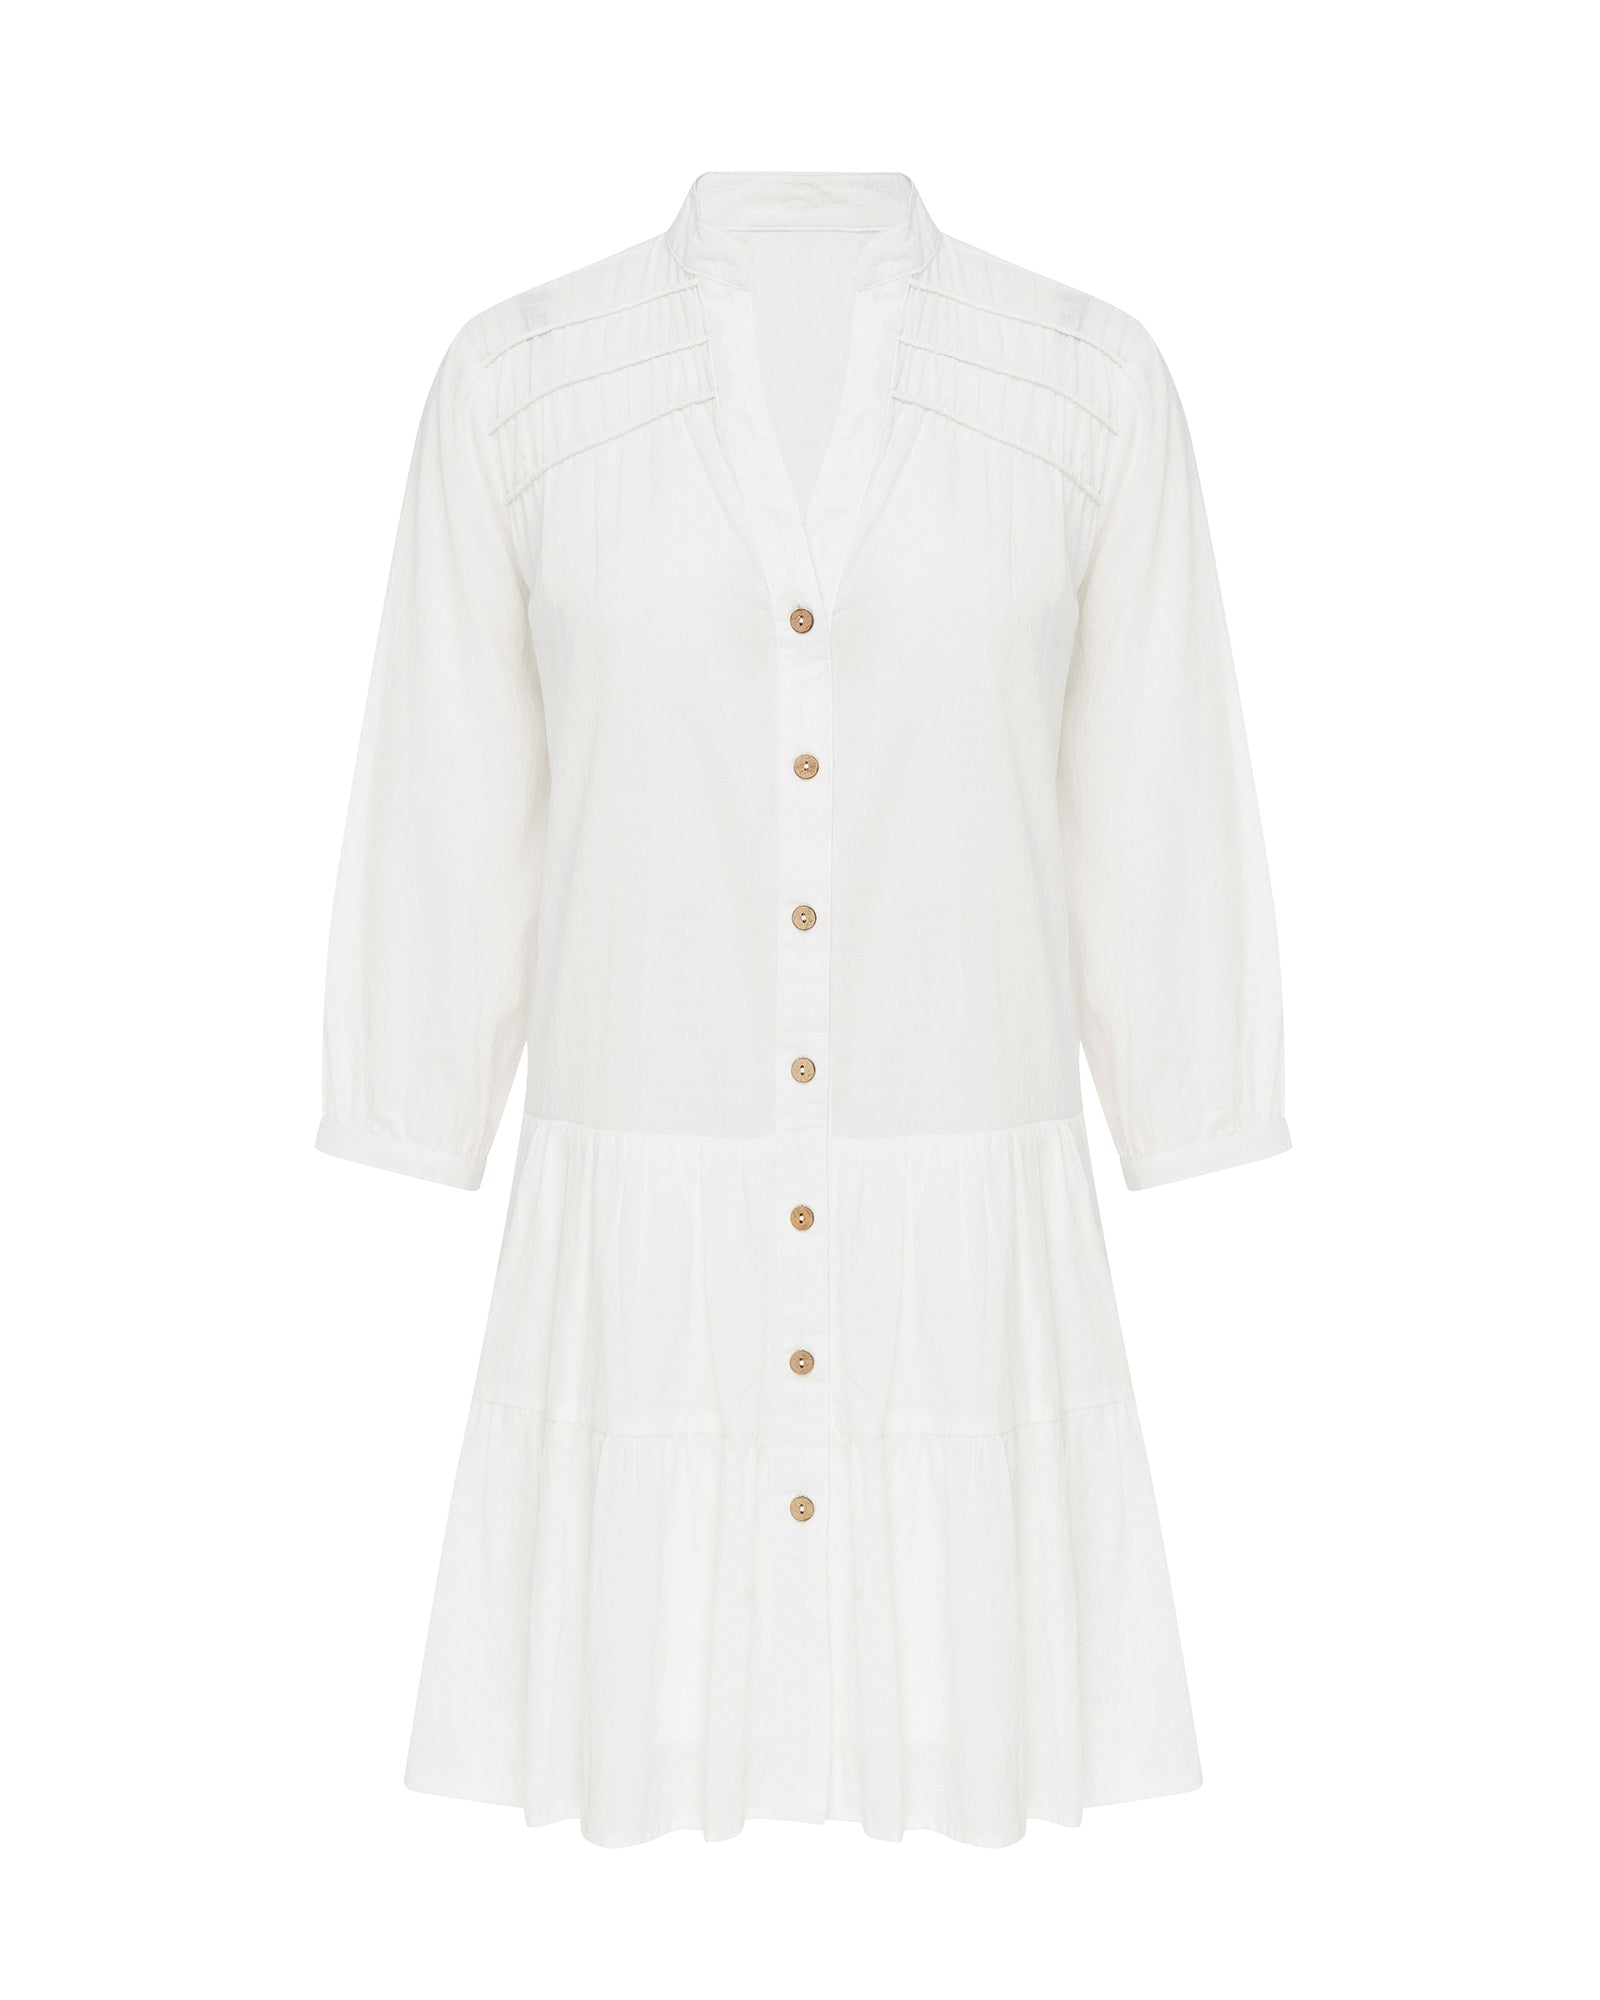 Gaby White Button Down Mini Dress